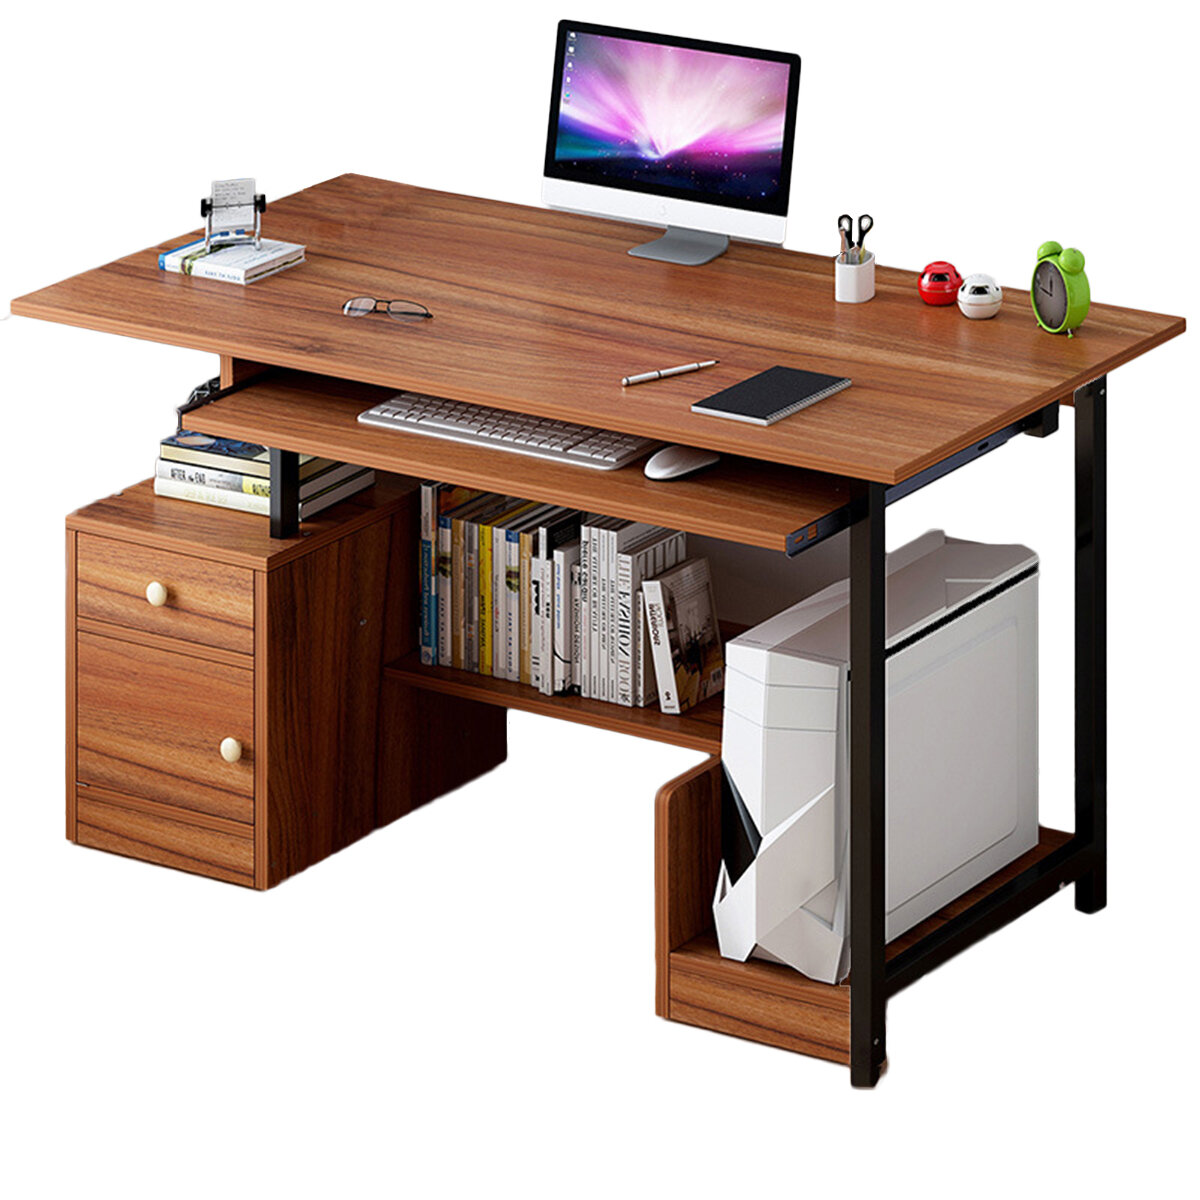 

Computer Laptop Desk Writing Study Table Desktop Workstation Computer Case Rack Home Office Furniture with Storage Cabin